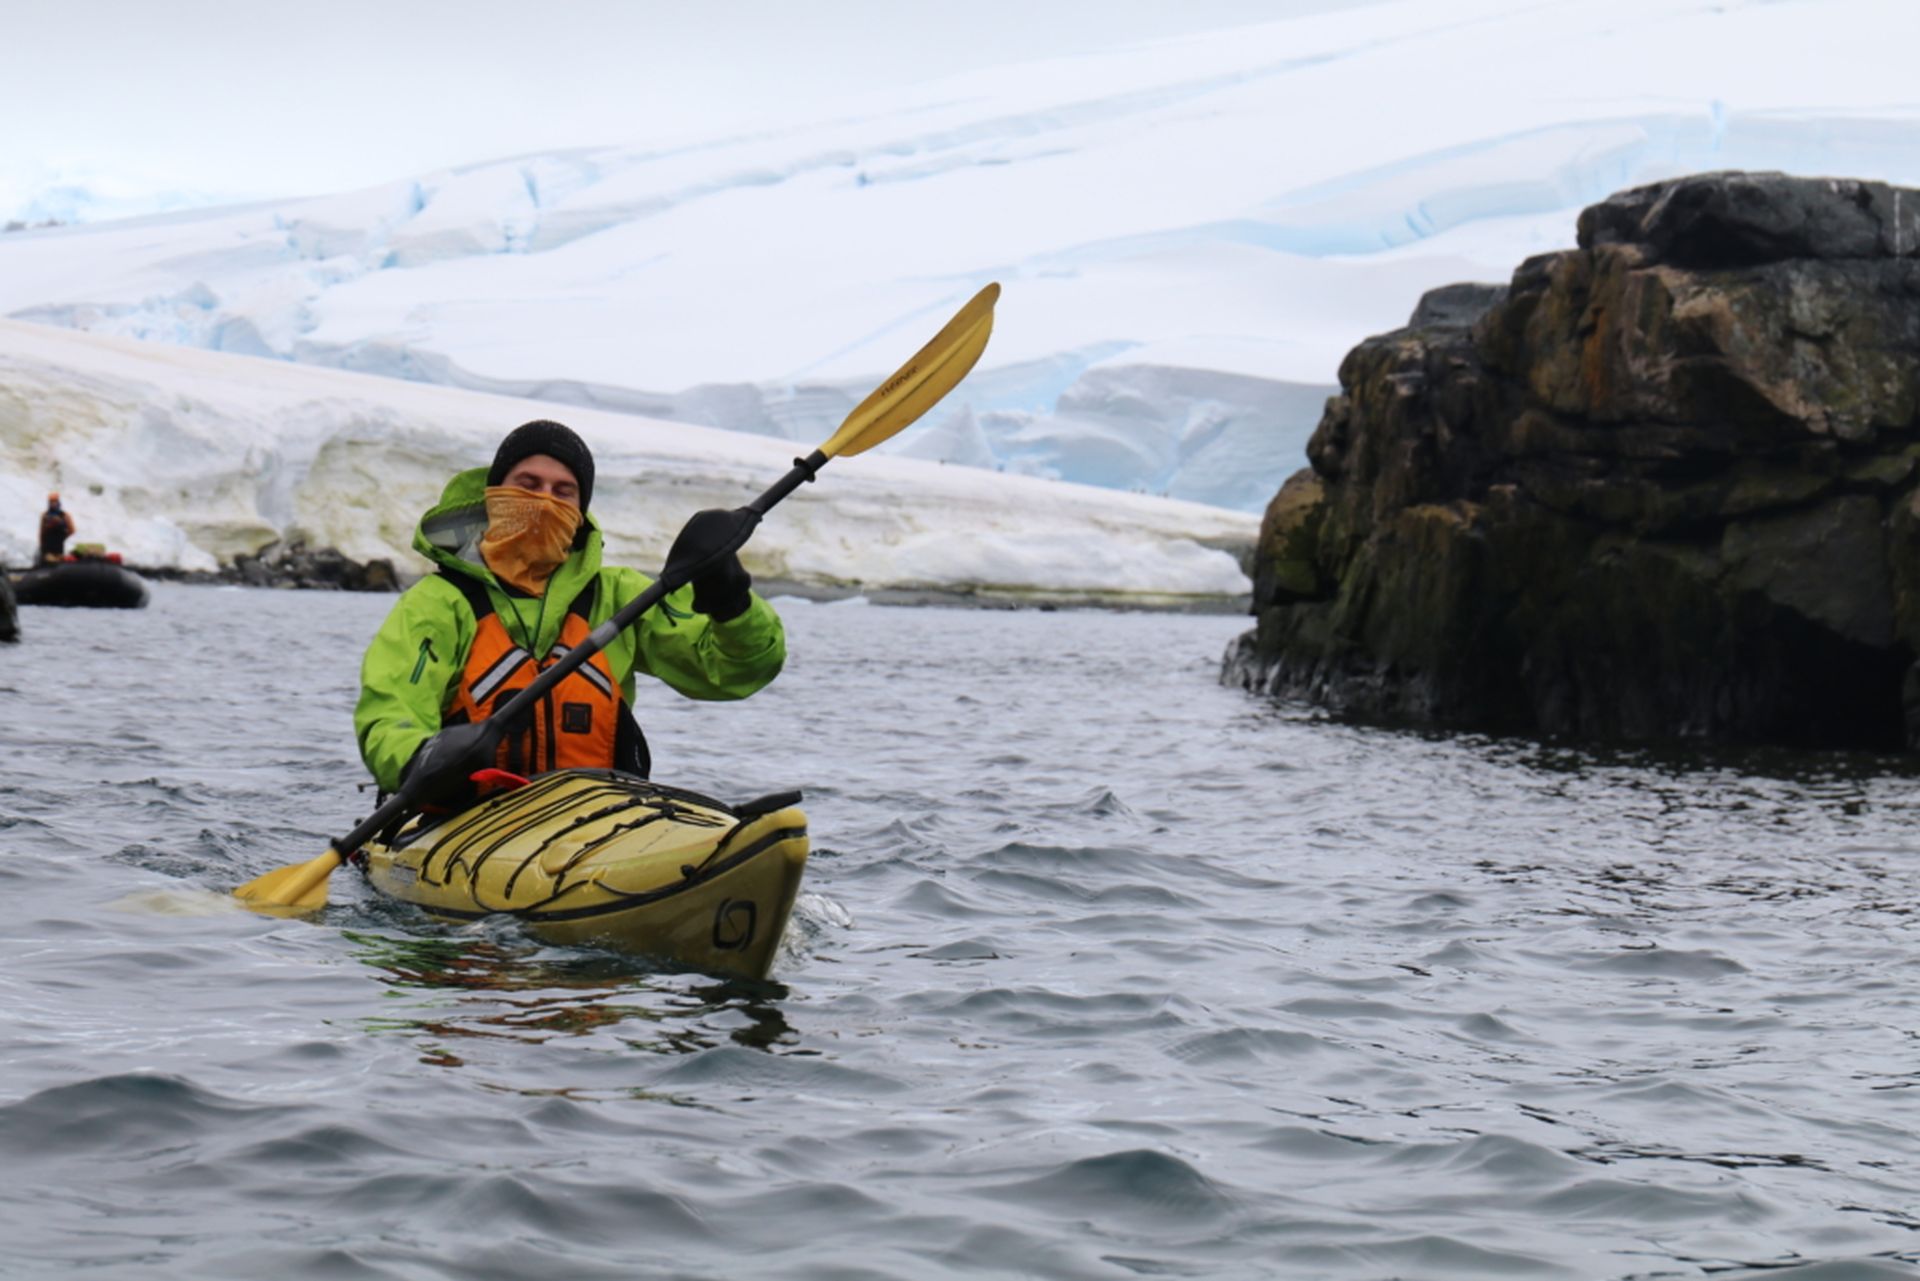 Mike Kayaking in Antarctica